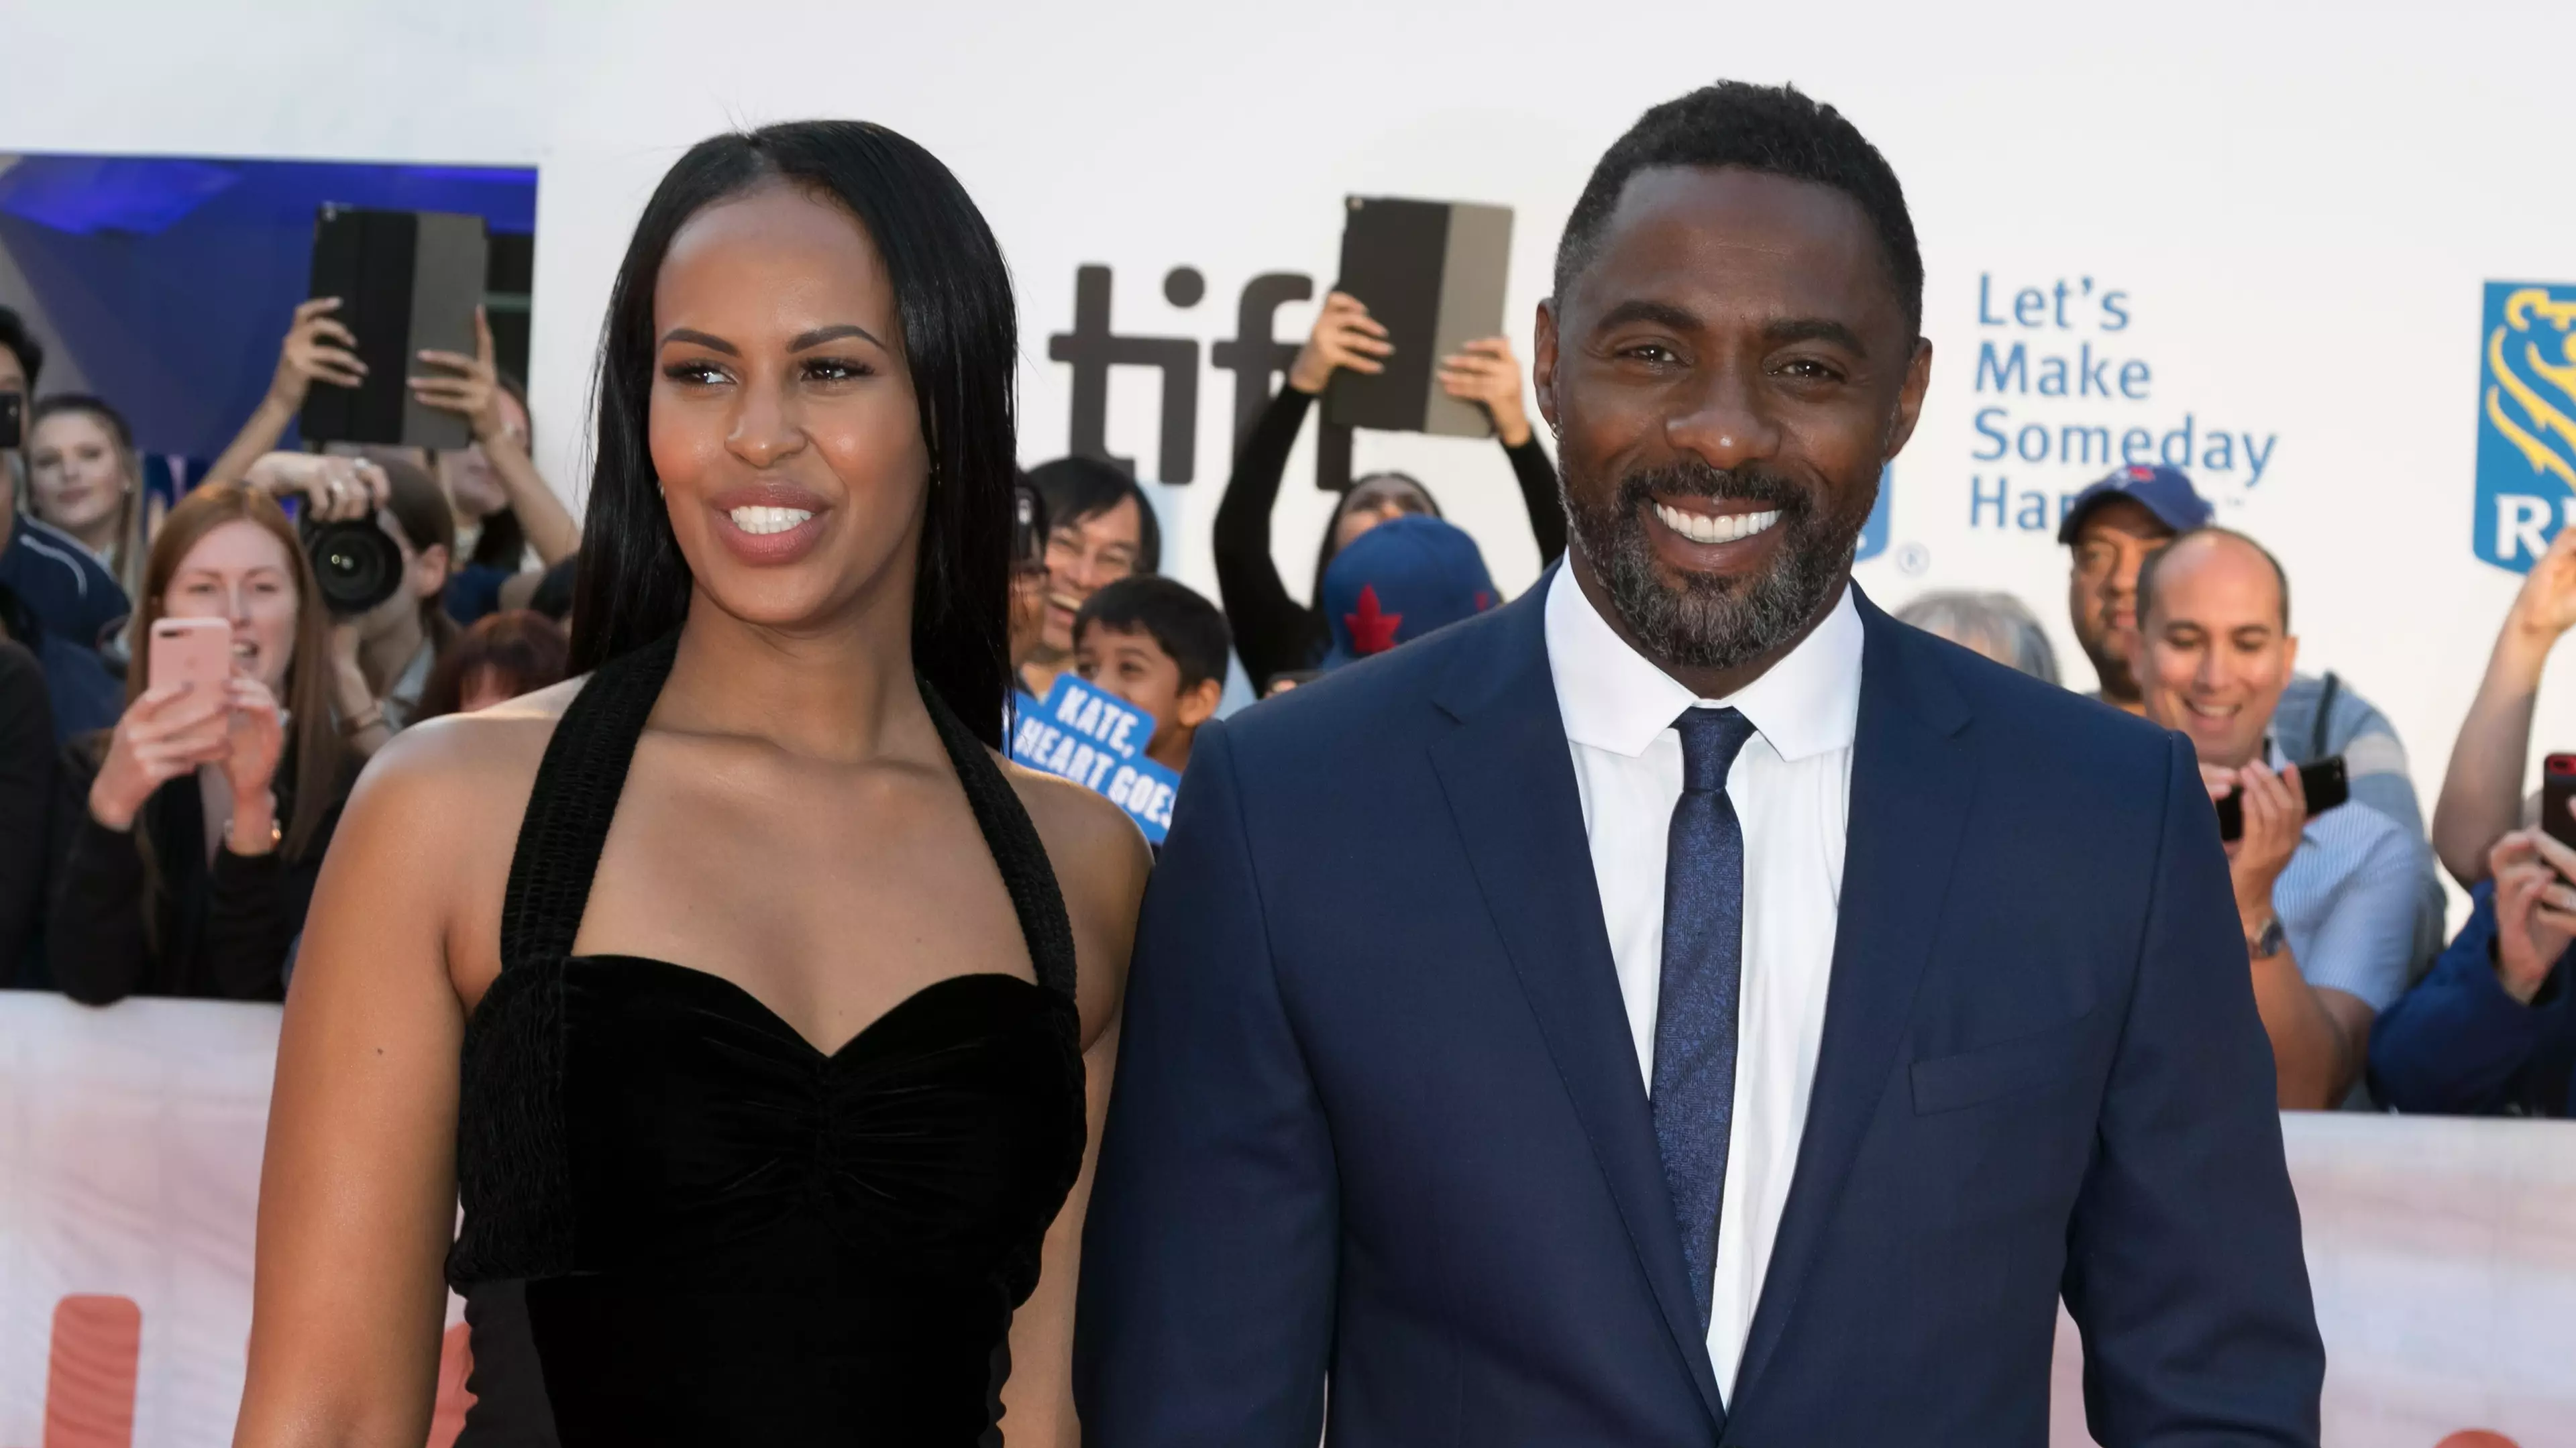 Idris Elba Proposes To Girlfriend At Screening Of His New Film 